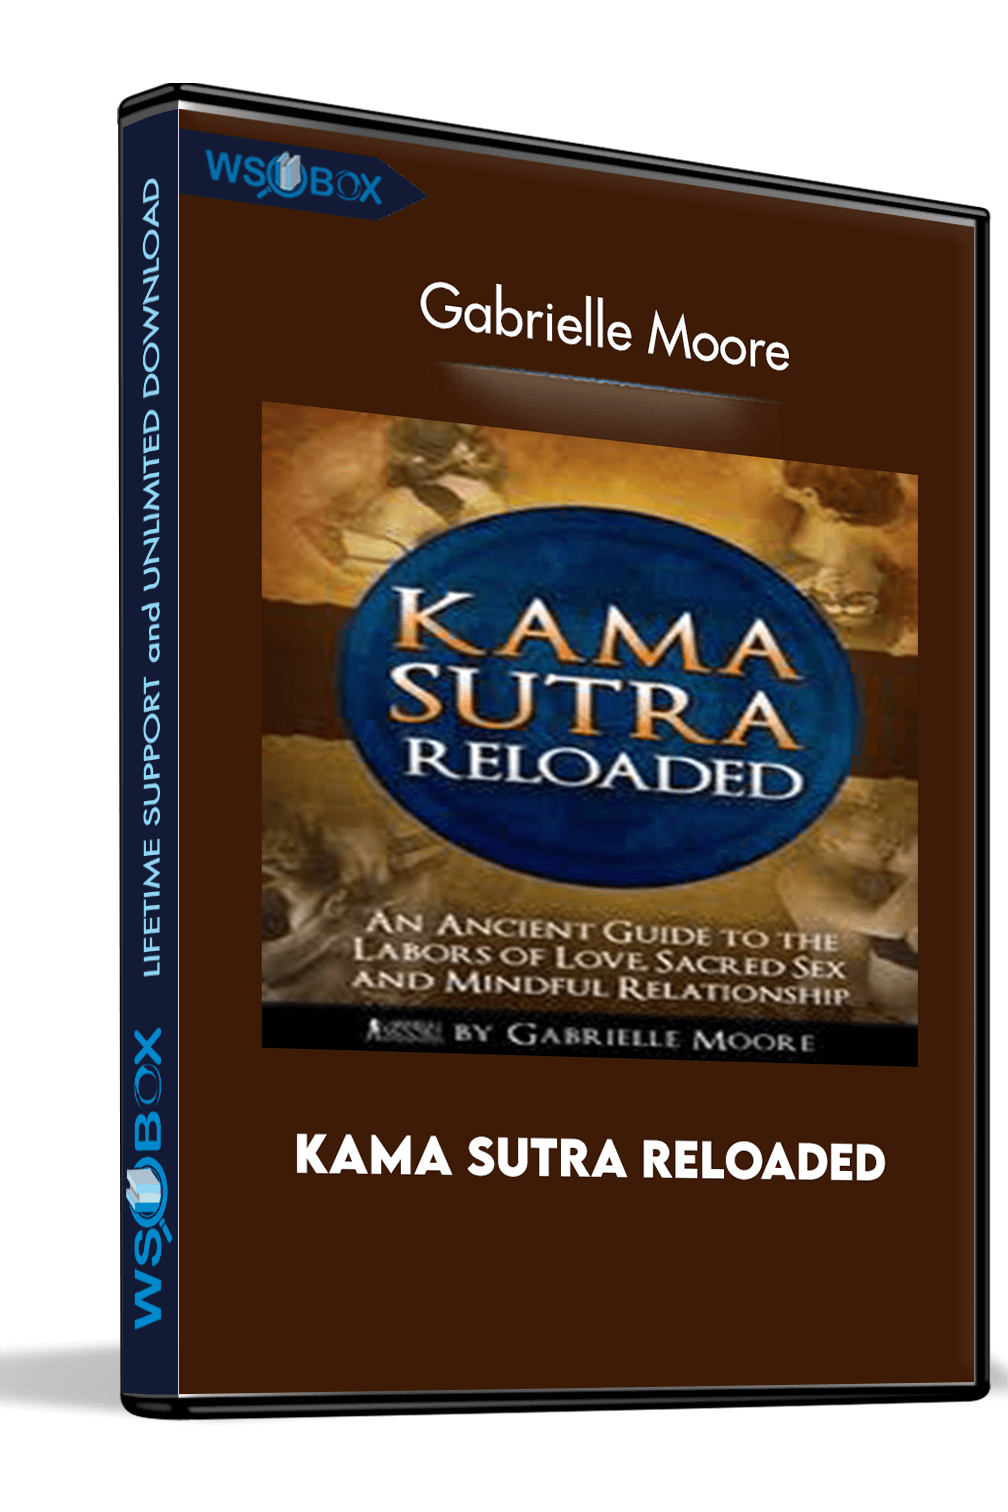 kama-sutra-reloaded-gabrielle-moore